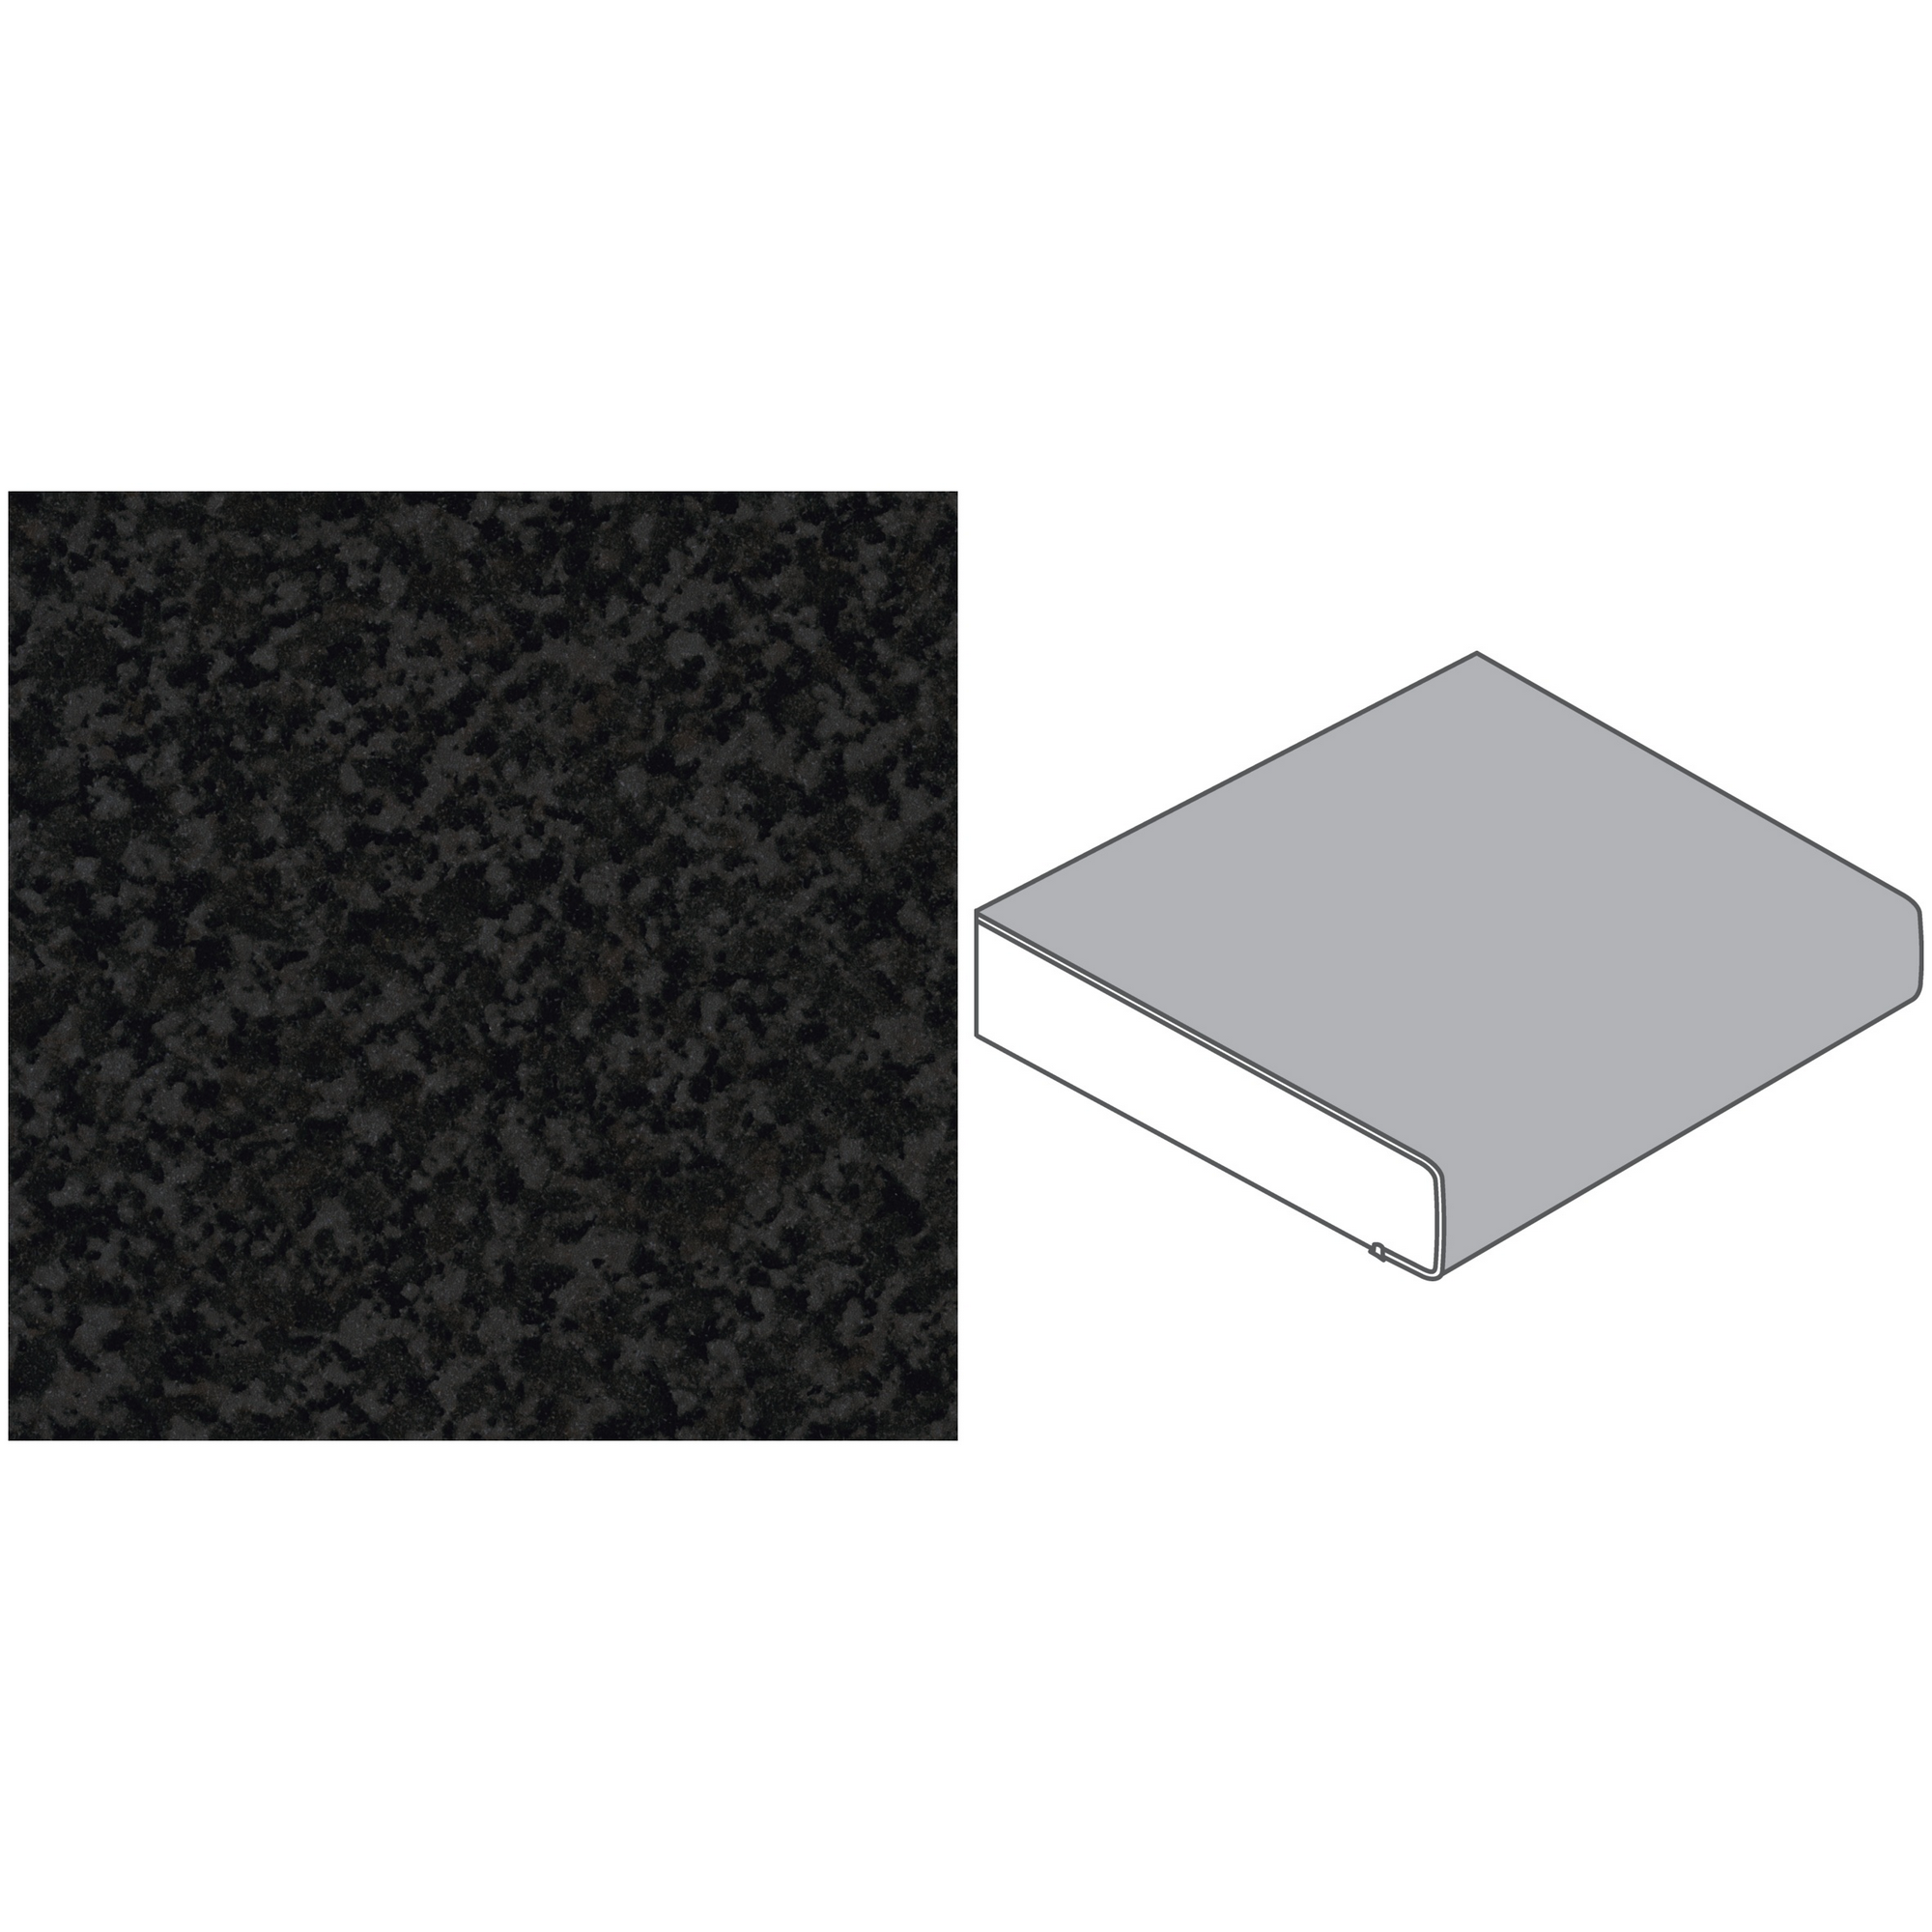 Küchenarbeitsplatte 'GT117 C' 4100 x 600 x 39 mm granit anthrazit + product picture